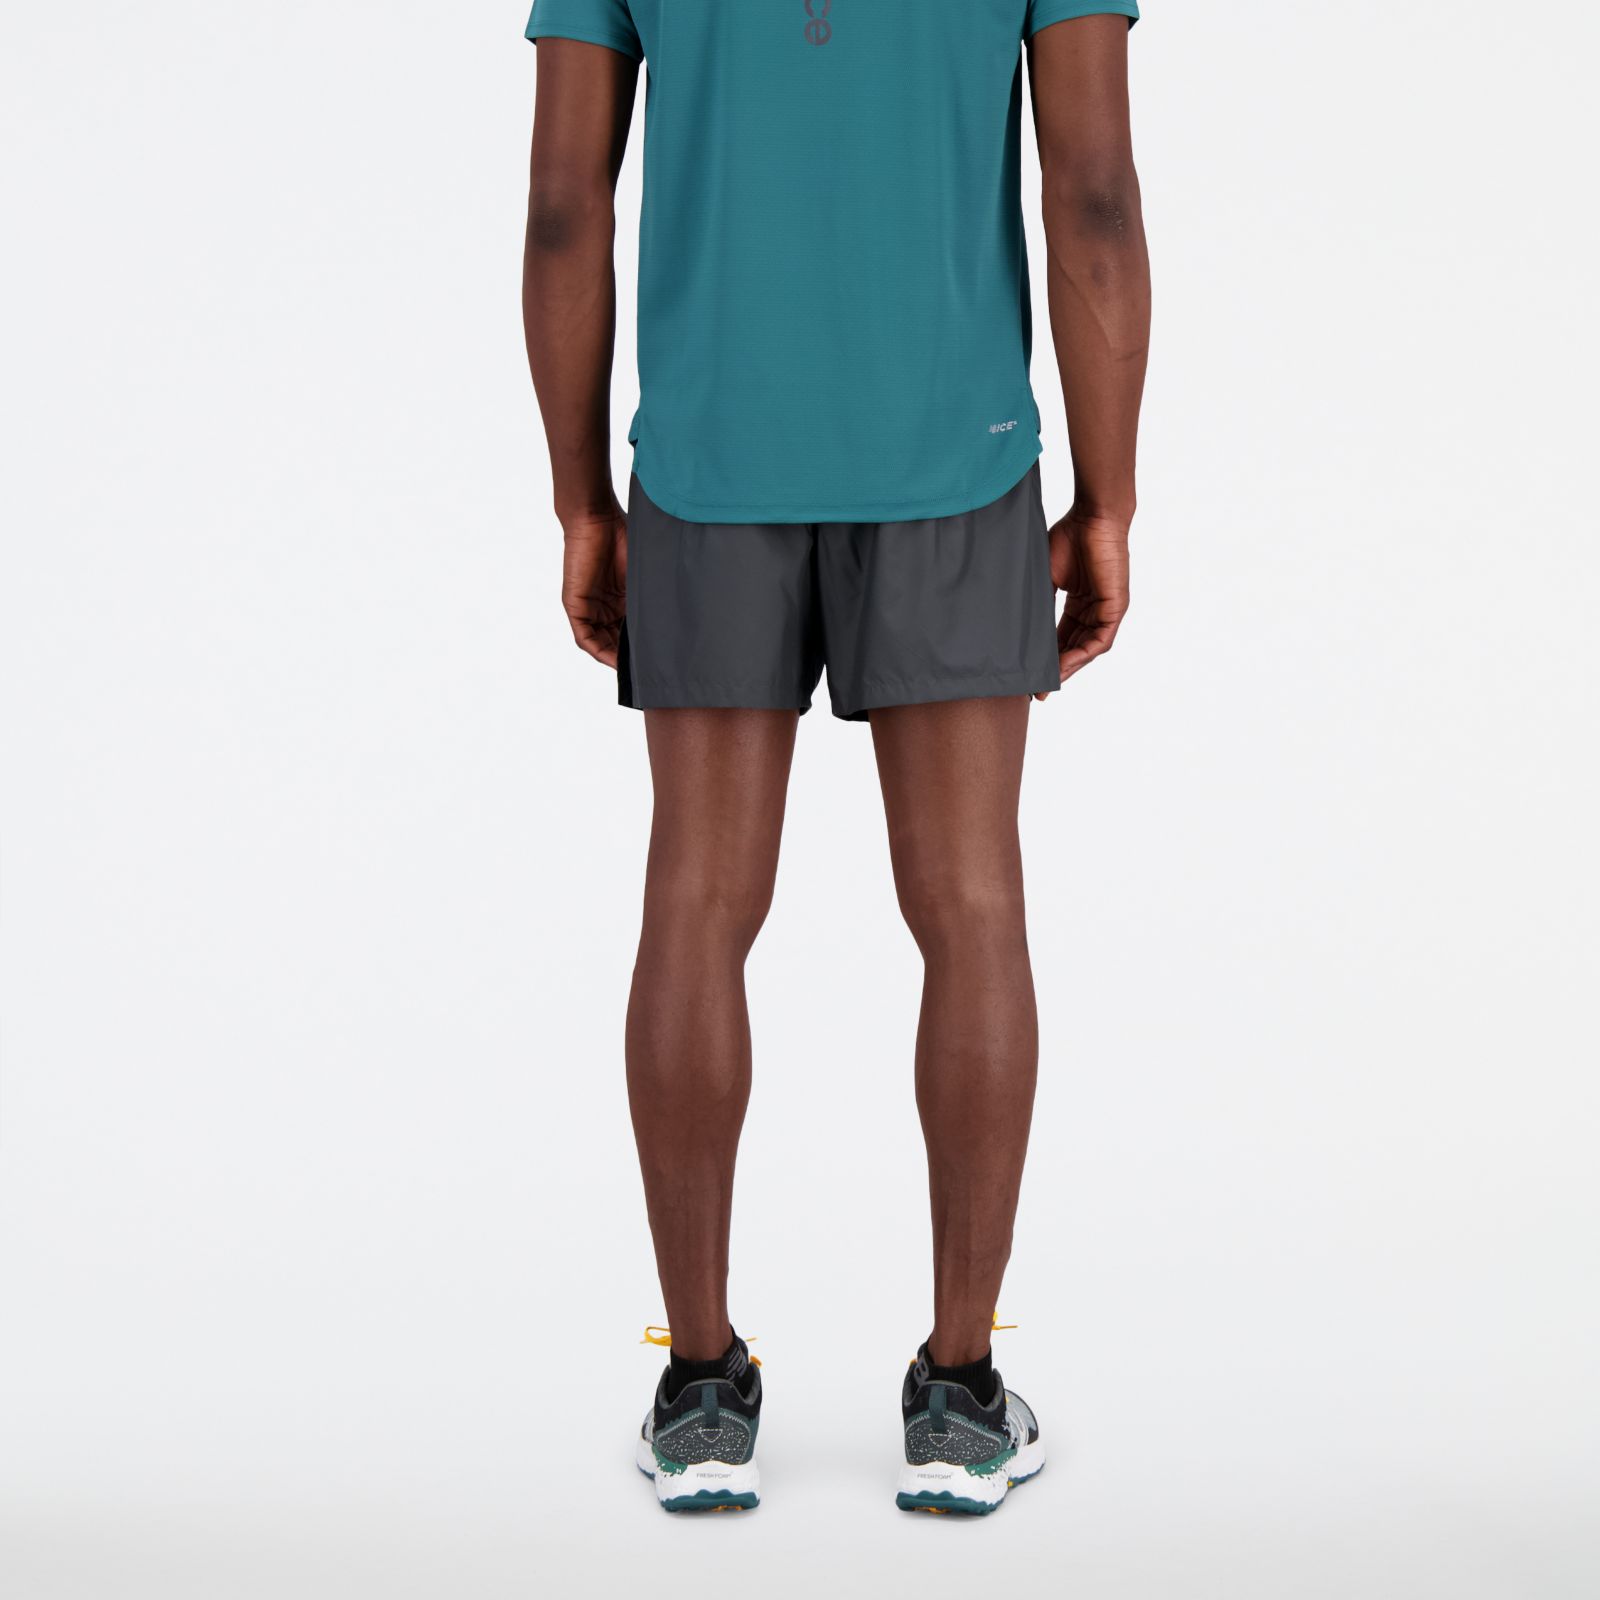 Nike Men's Trail Running Shorts 5” CZ9052 638 Burgundy Move to